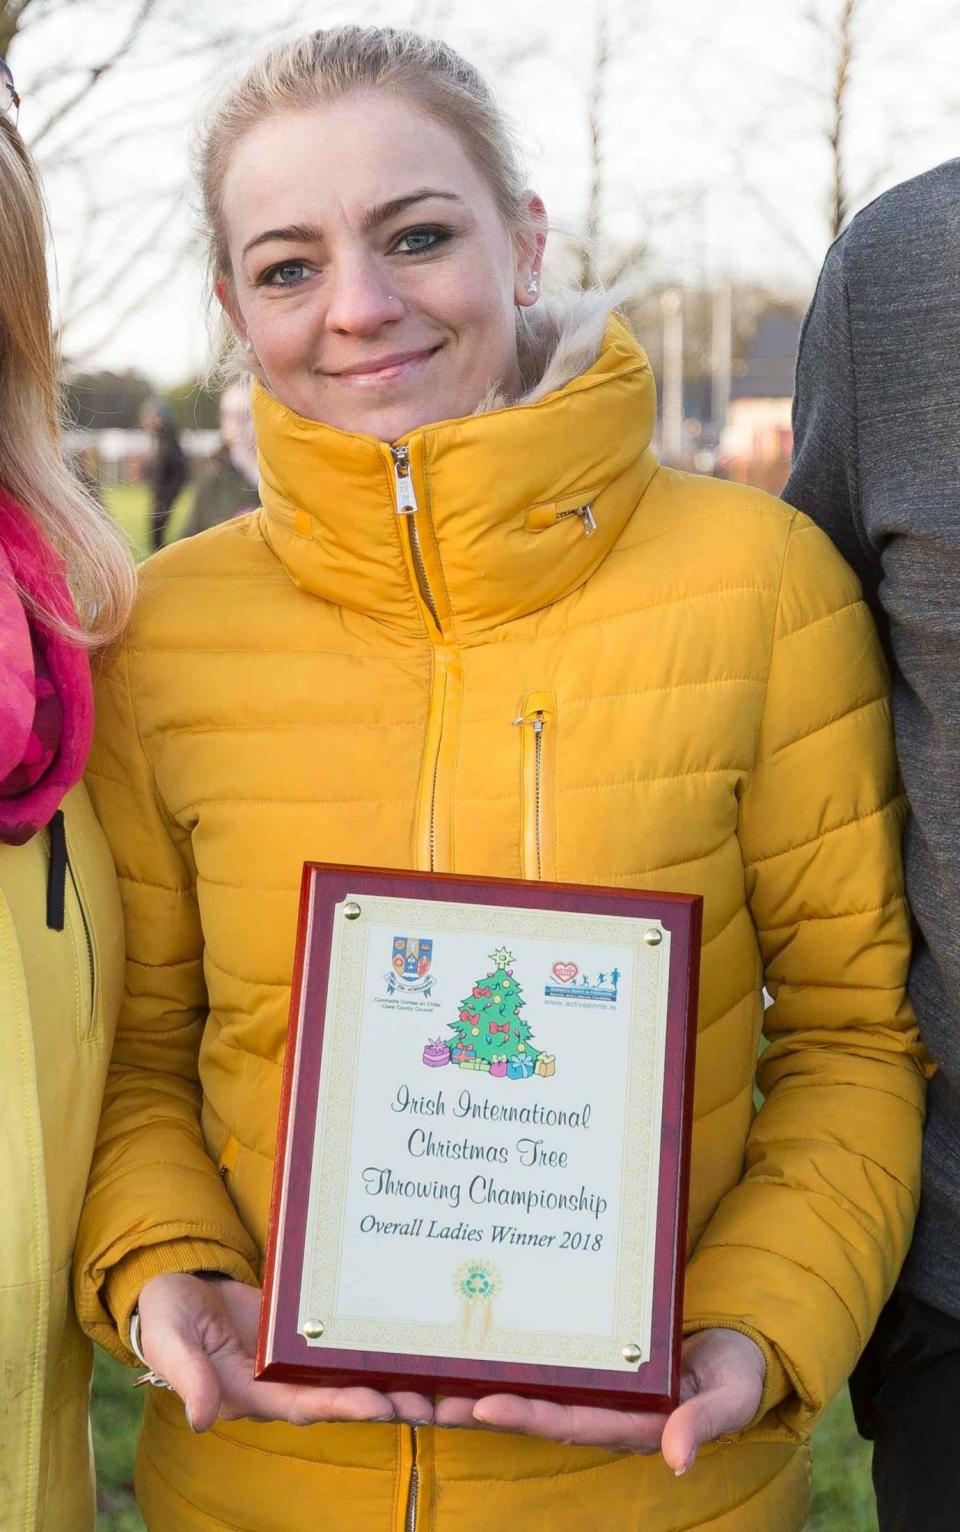 Tree hurler Kamila Grabska with her Overall Ladies Winner 2018 certificate